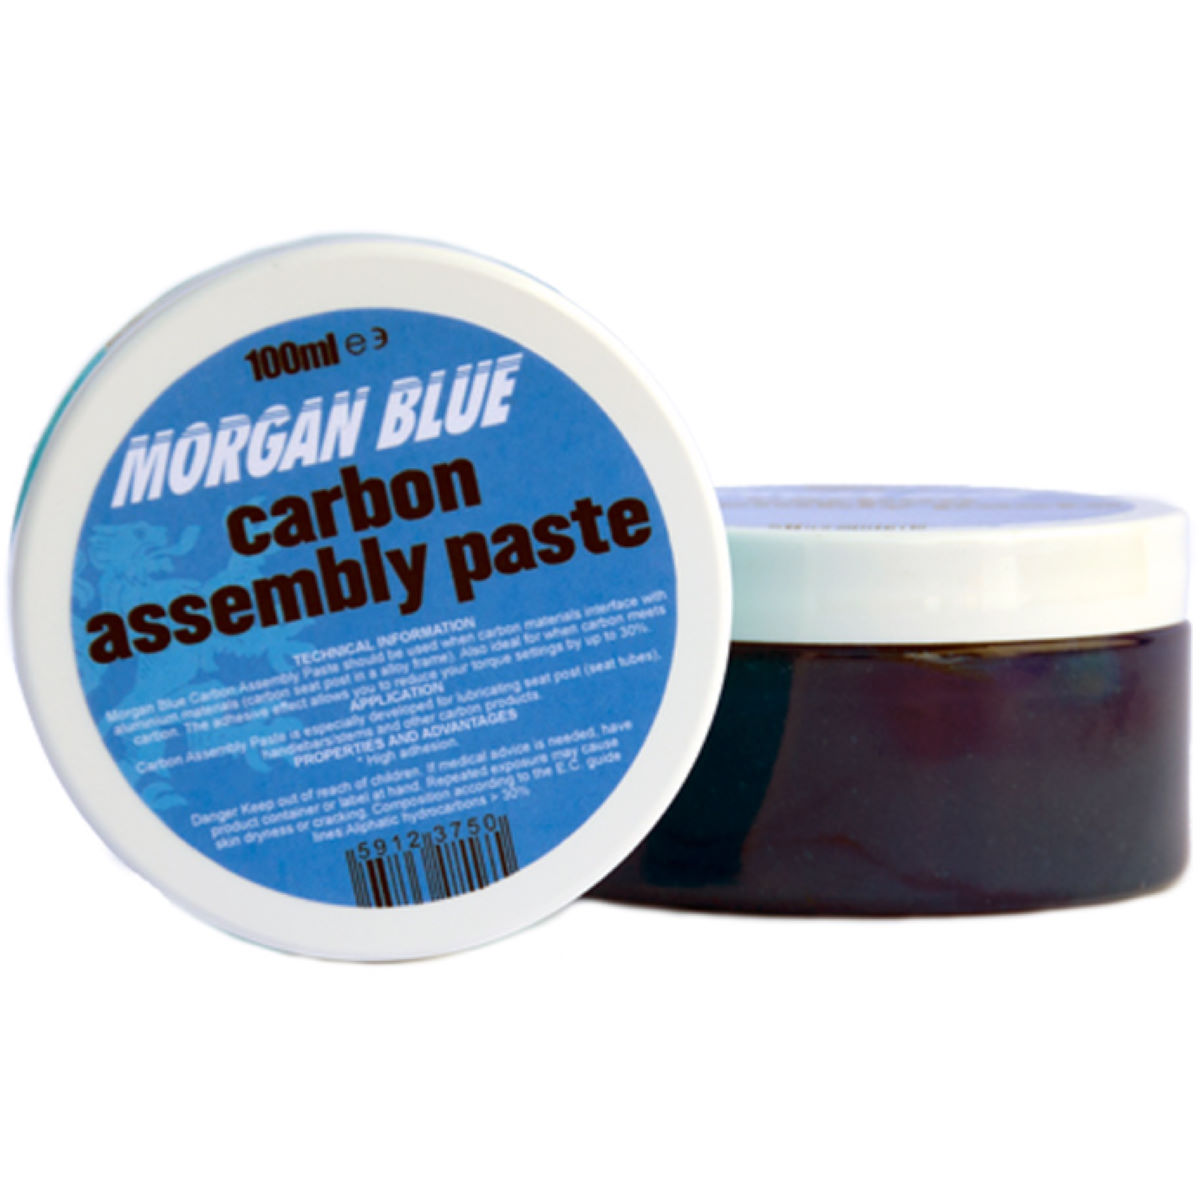 Morgan Blue Carbon Assembly Paste - Grasas